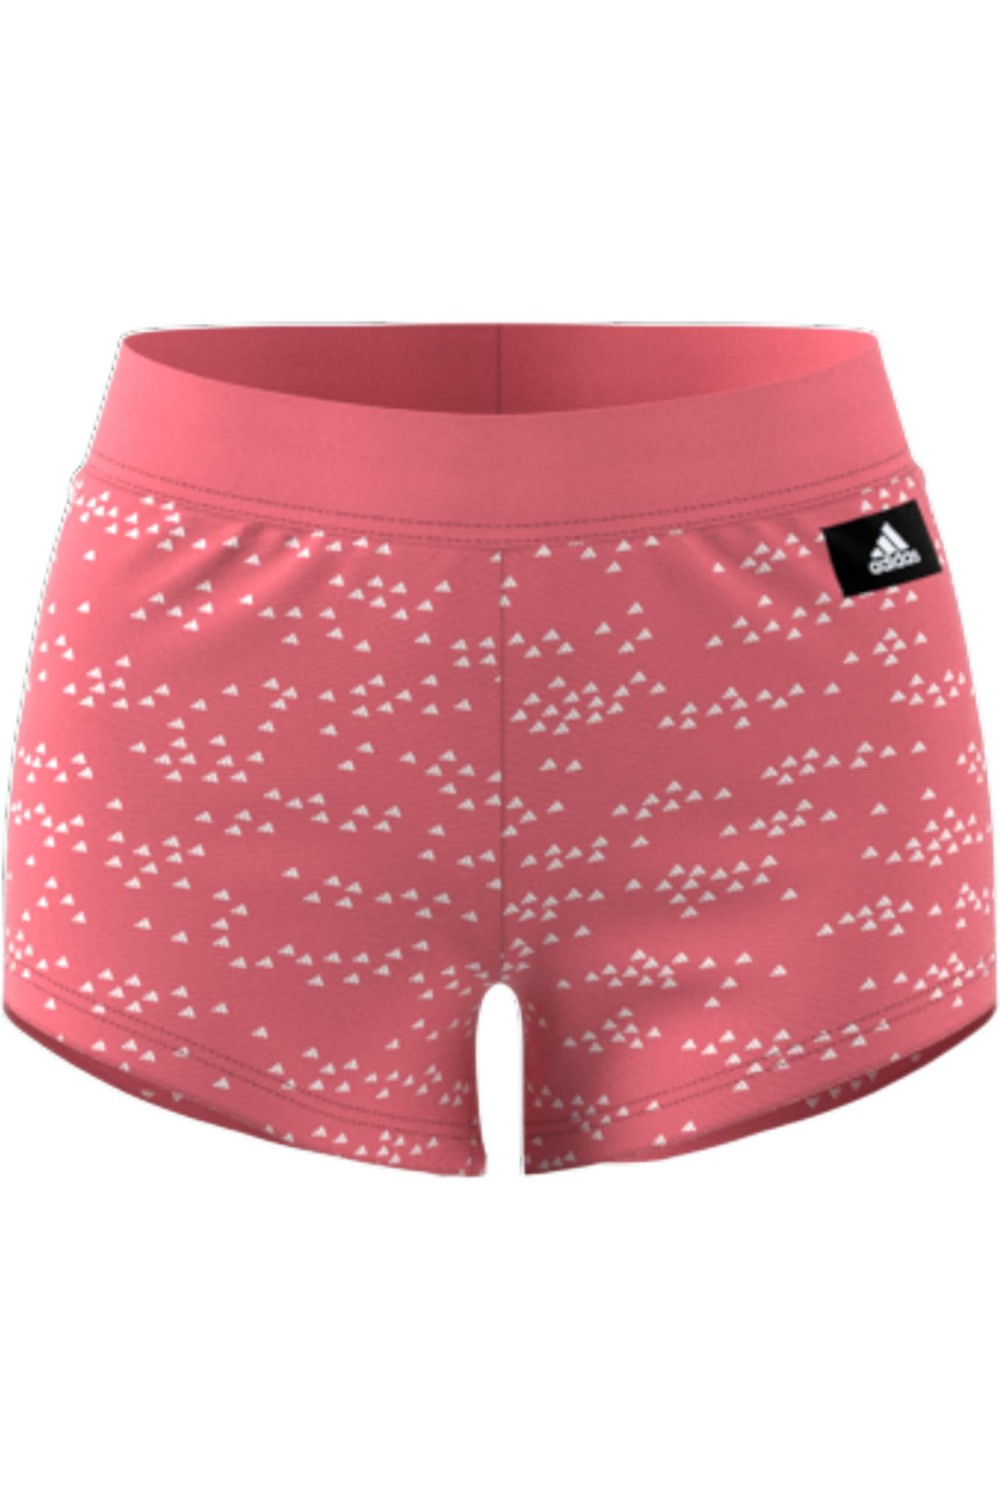 Misterio noche agudo pantalones cortos adidas win short rosa gq6067